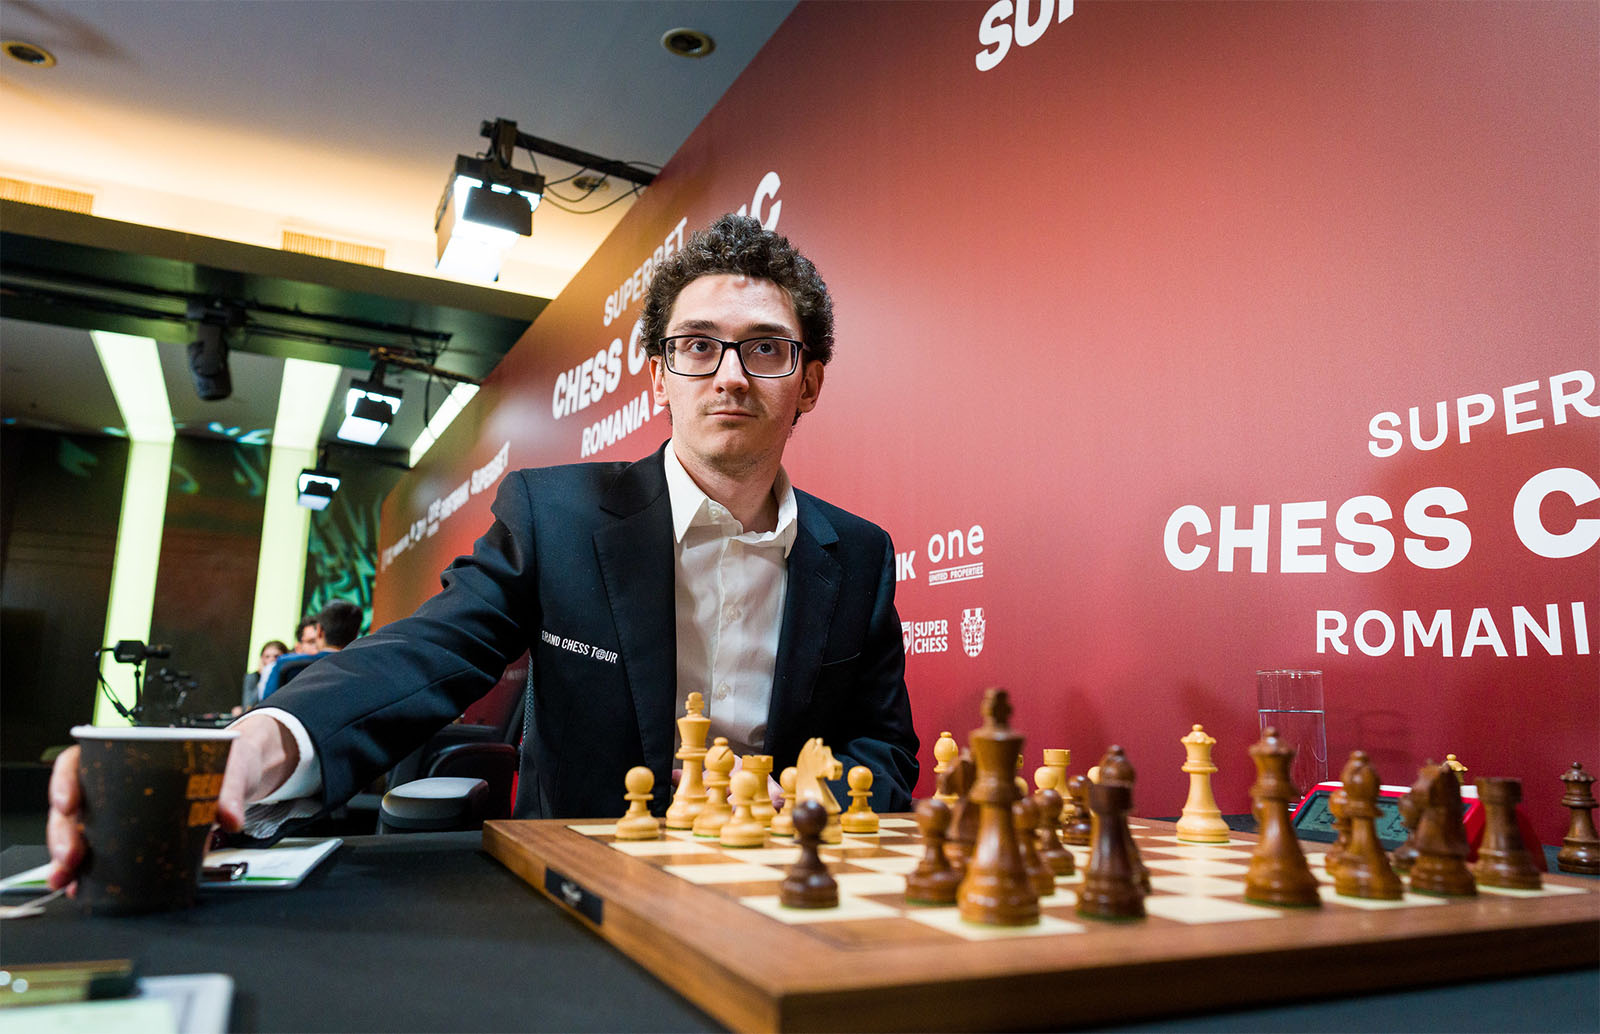 2023 Superbet Chess Classic Romania